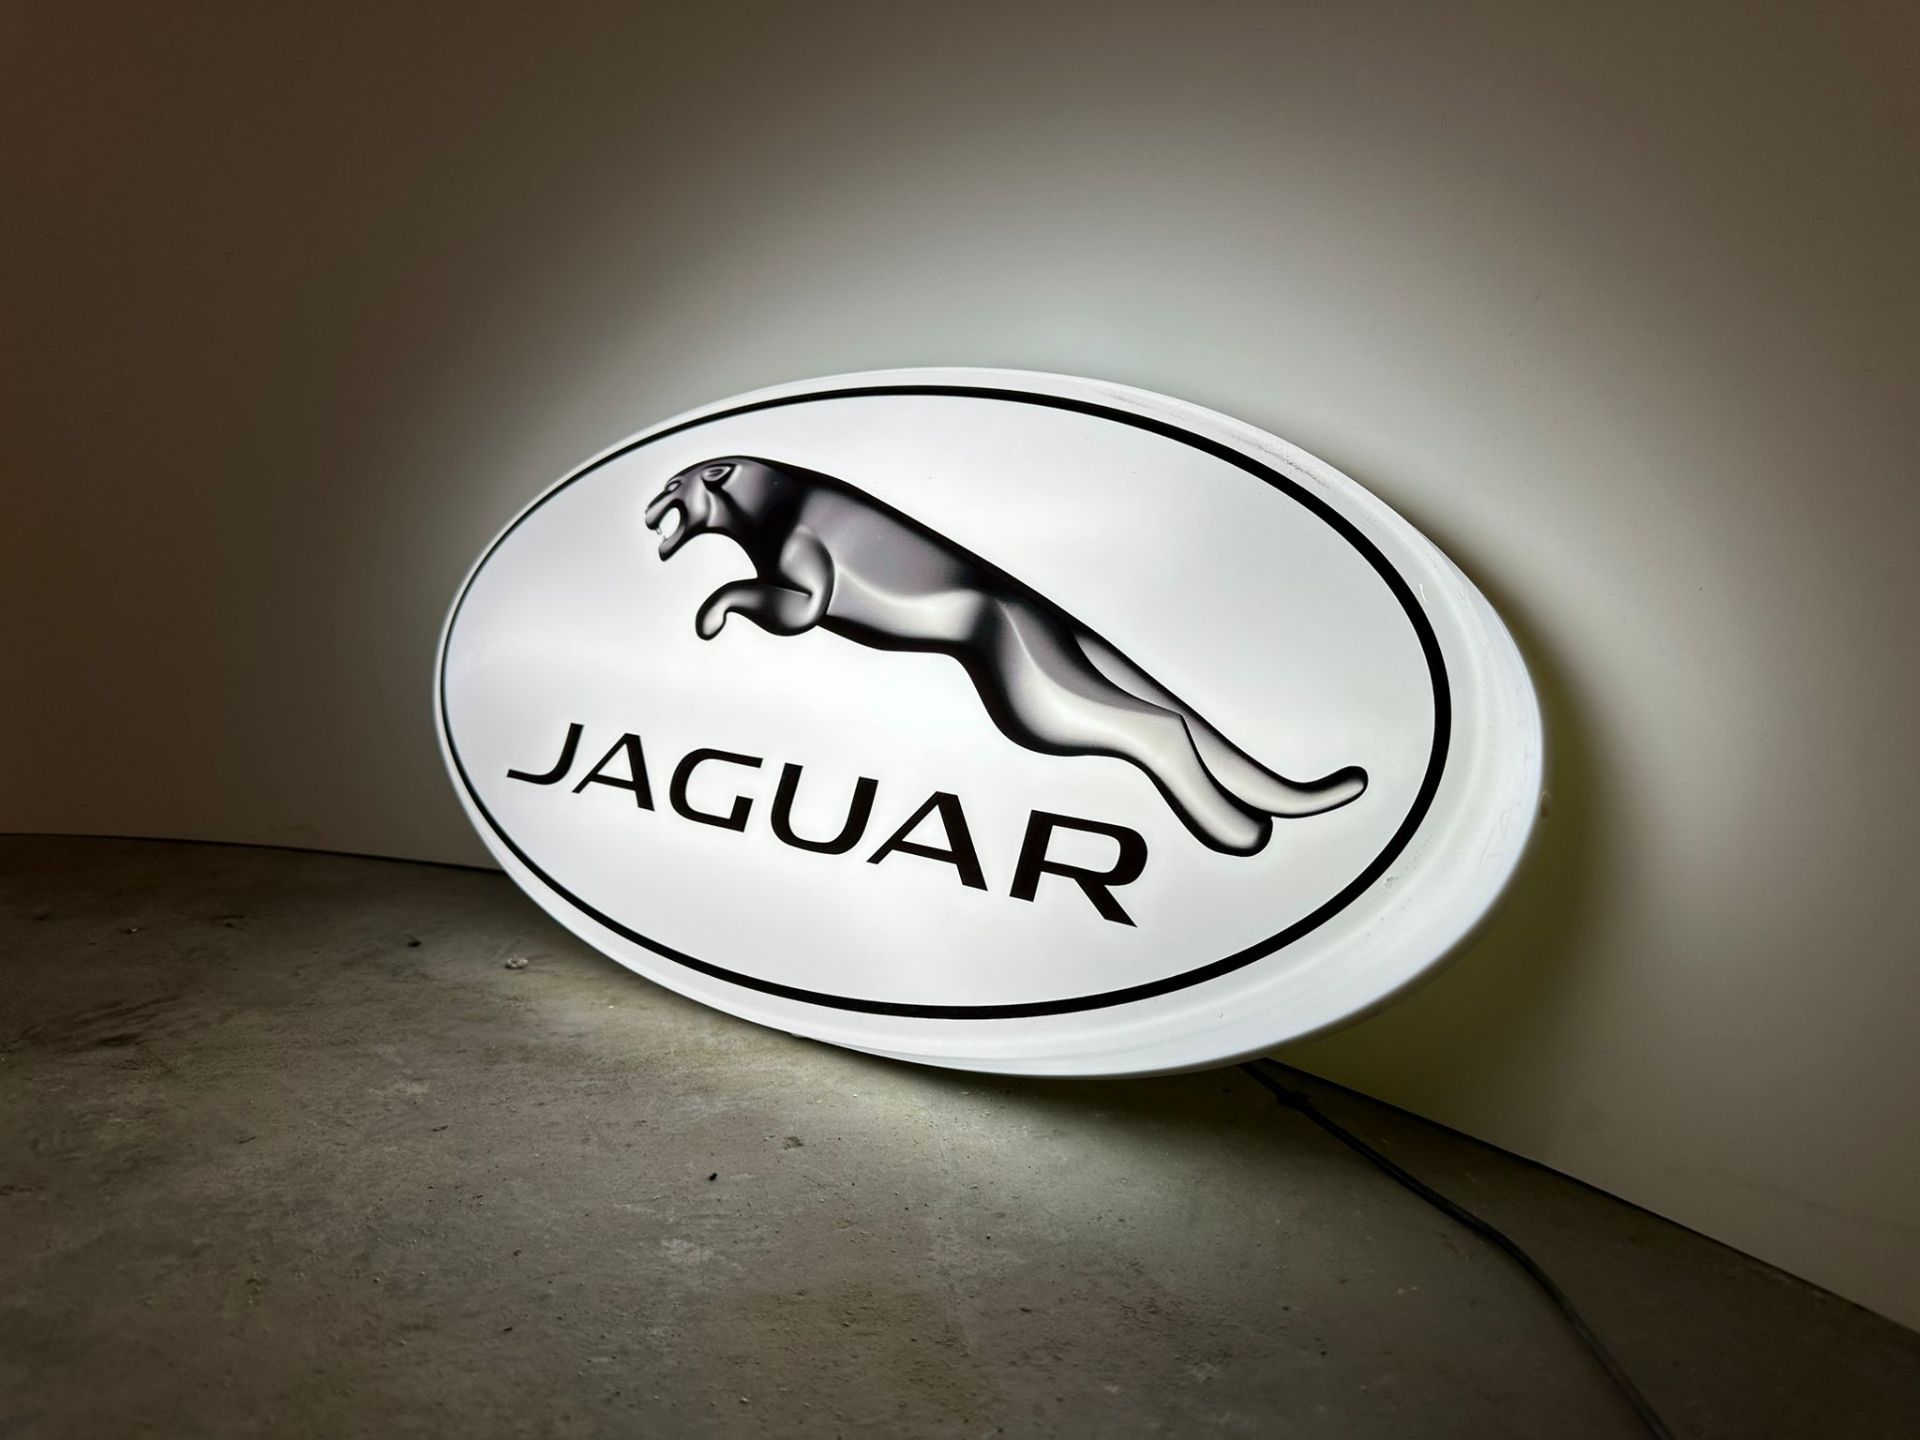 jaguar sign illuminated - Image 2 of 4